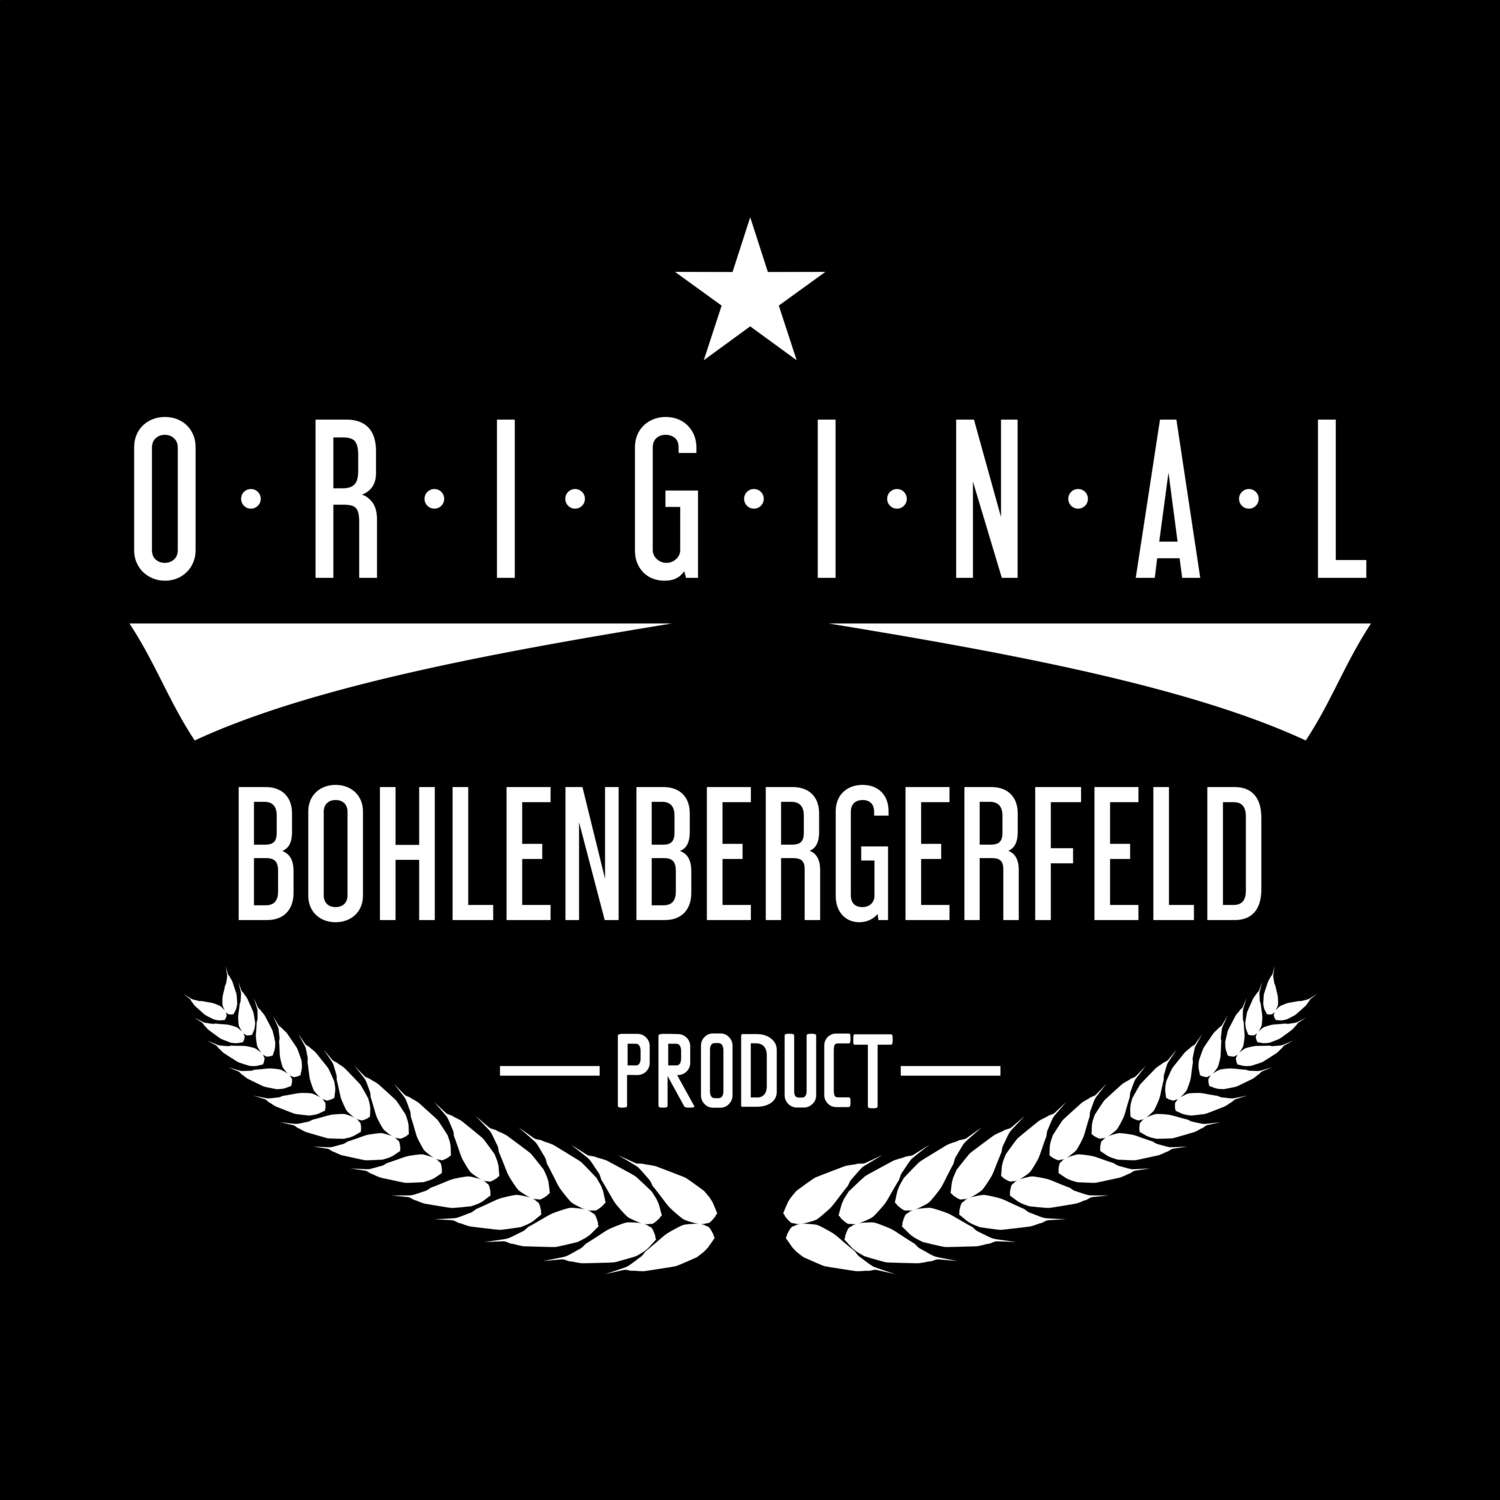 Bohlenbergerfeld T-Shirt »Original Product«